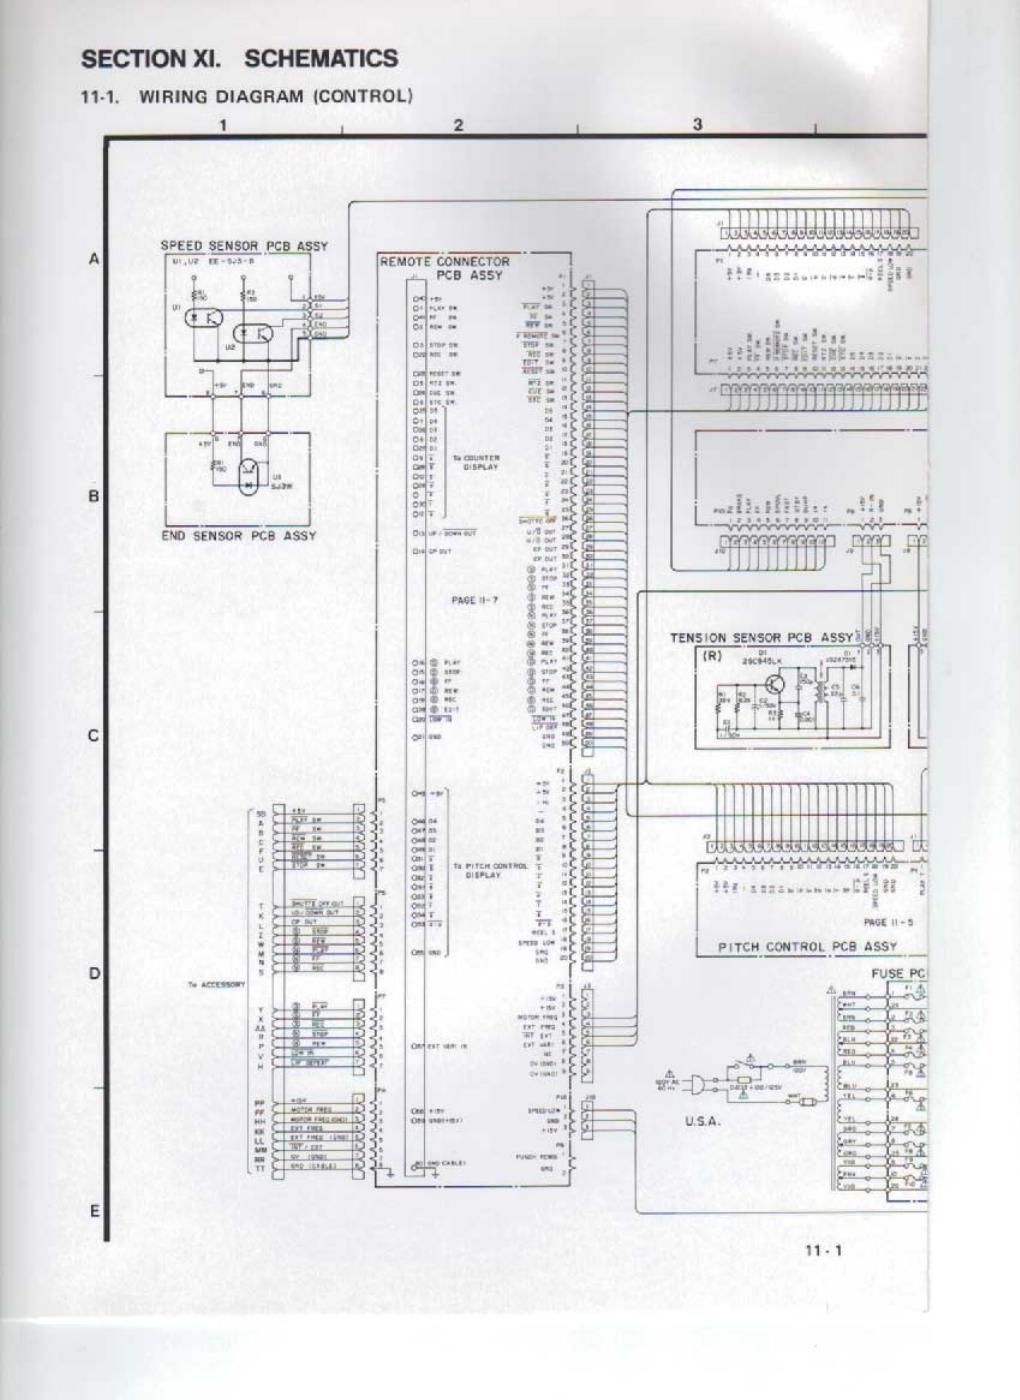 Tascam ATR 60 4 HS 8 Service Manual Part 4